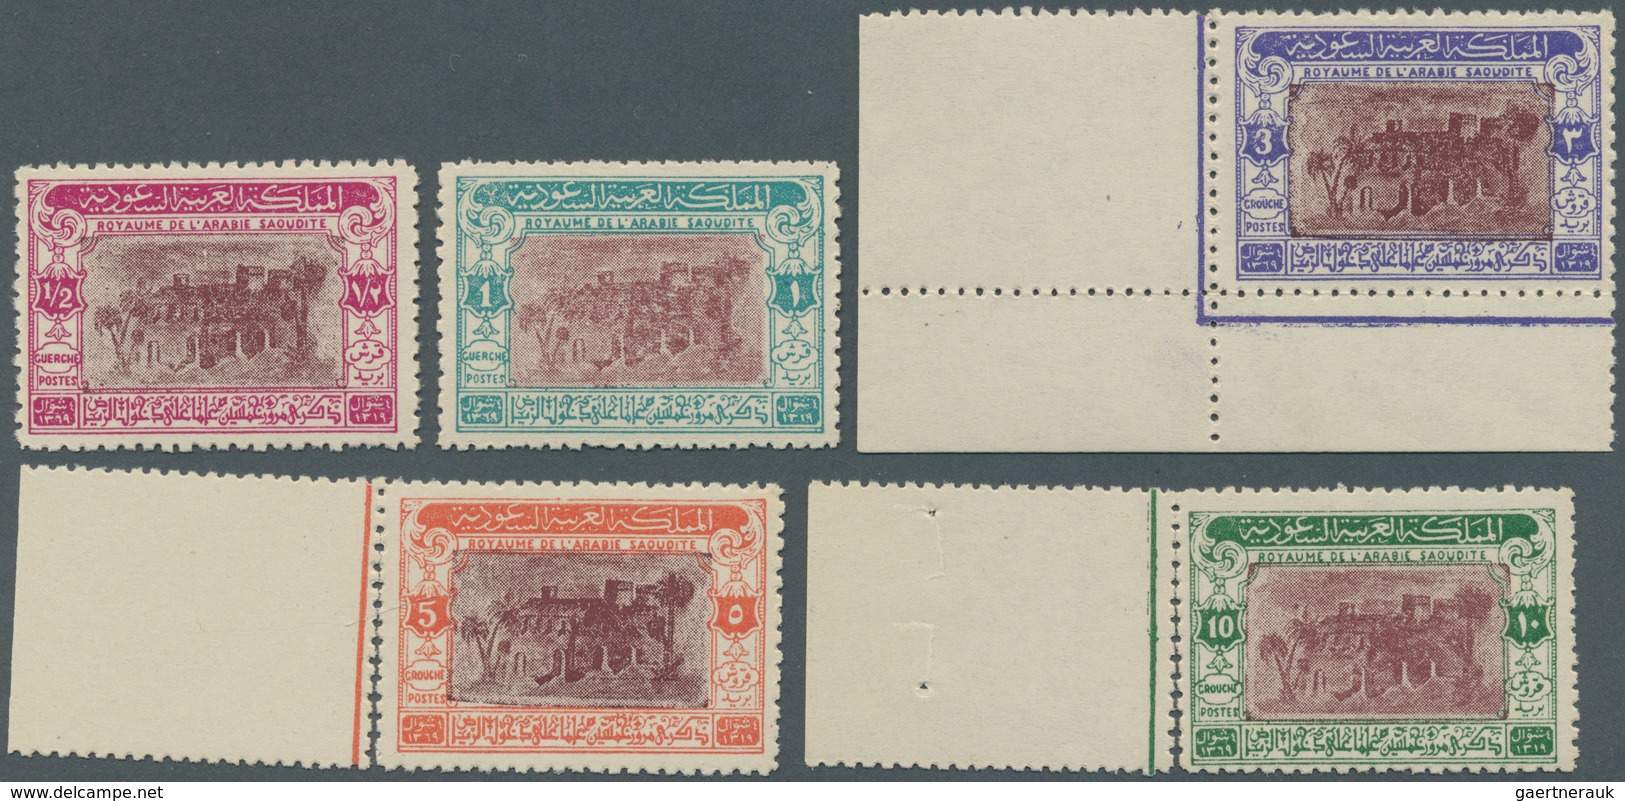 Saudi-Arabien: 1950, Anniversary Of Riyadh Capture Set Inc. Three Margin Copies, Mint Never Hinged M - Arabie Saoudite